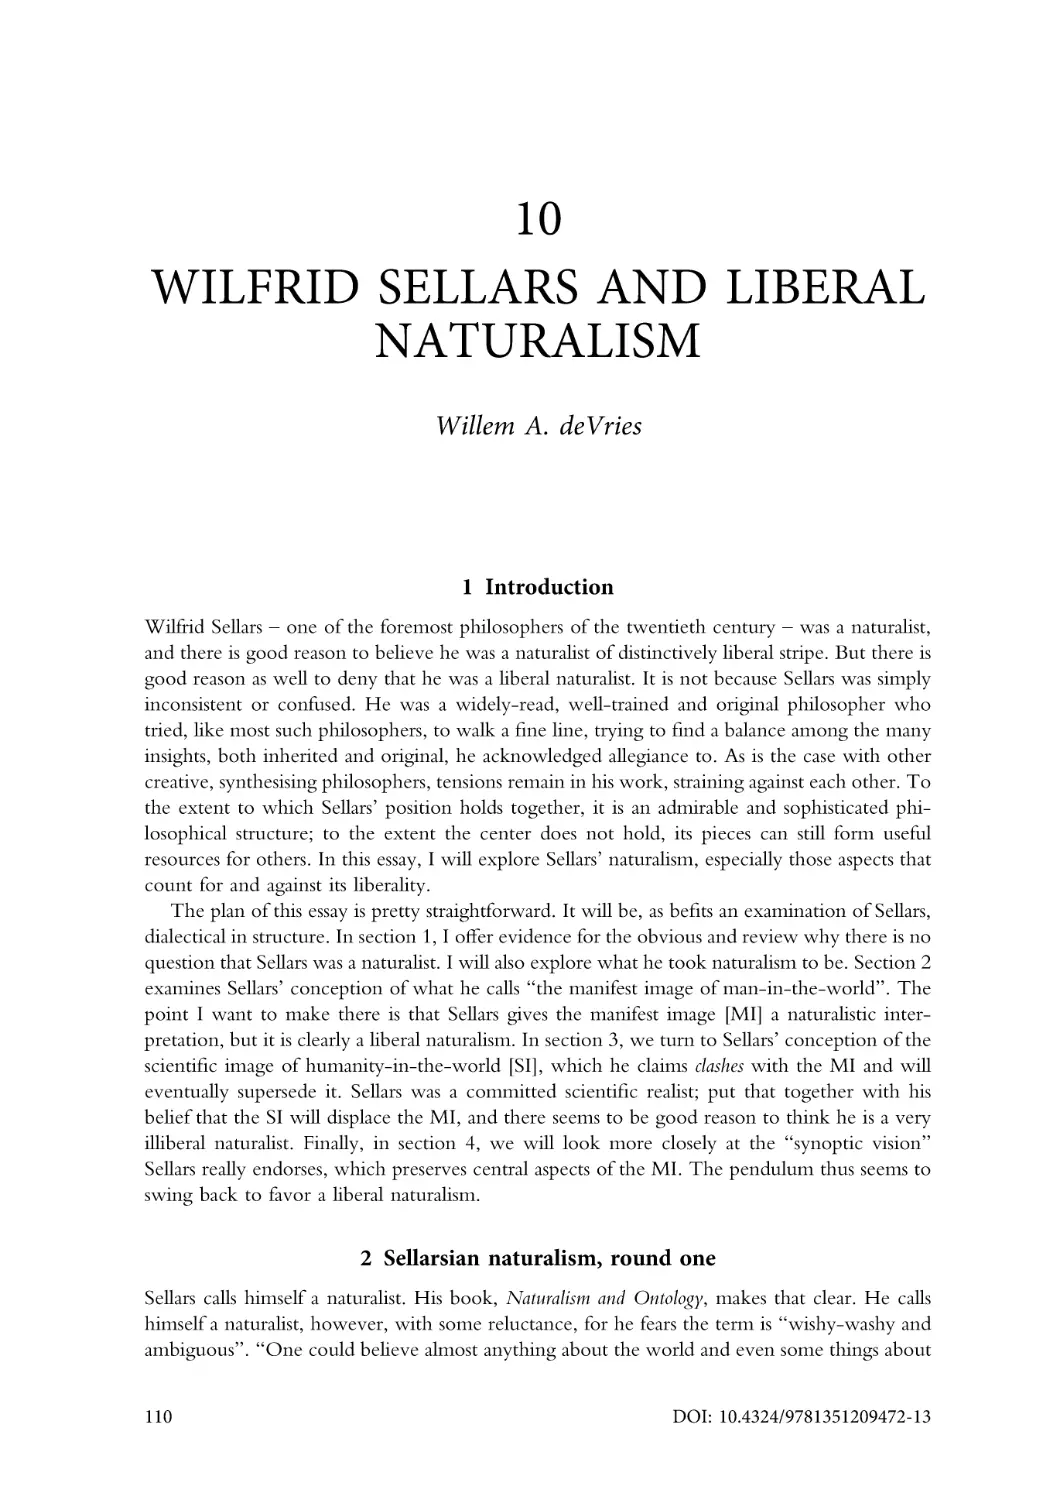 10. Wilfrid sellars and liberal naturalism
1. Introduction
2. Sellarsian naturalism, round one